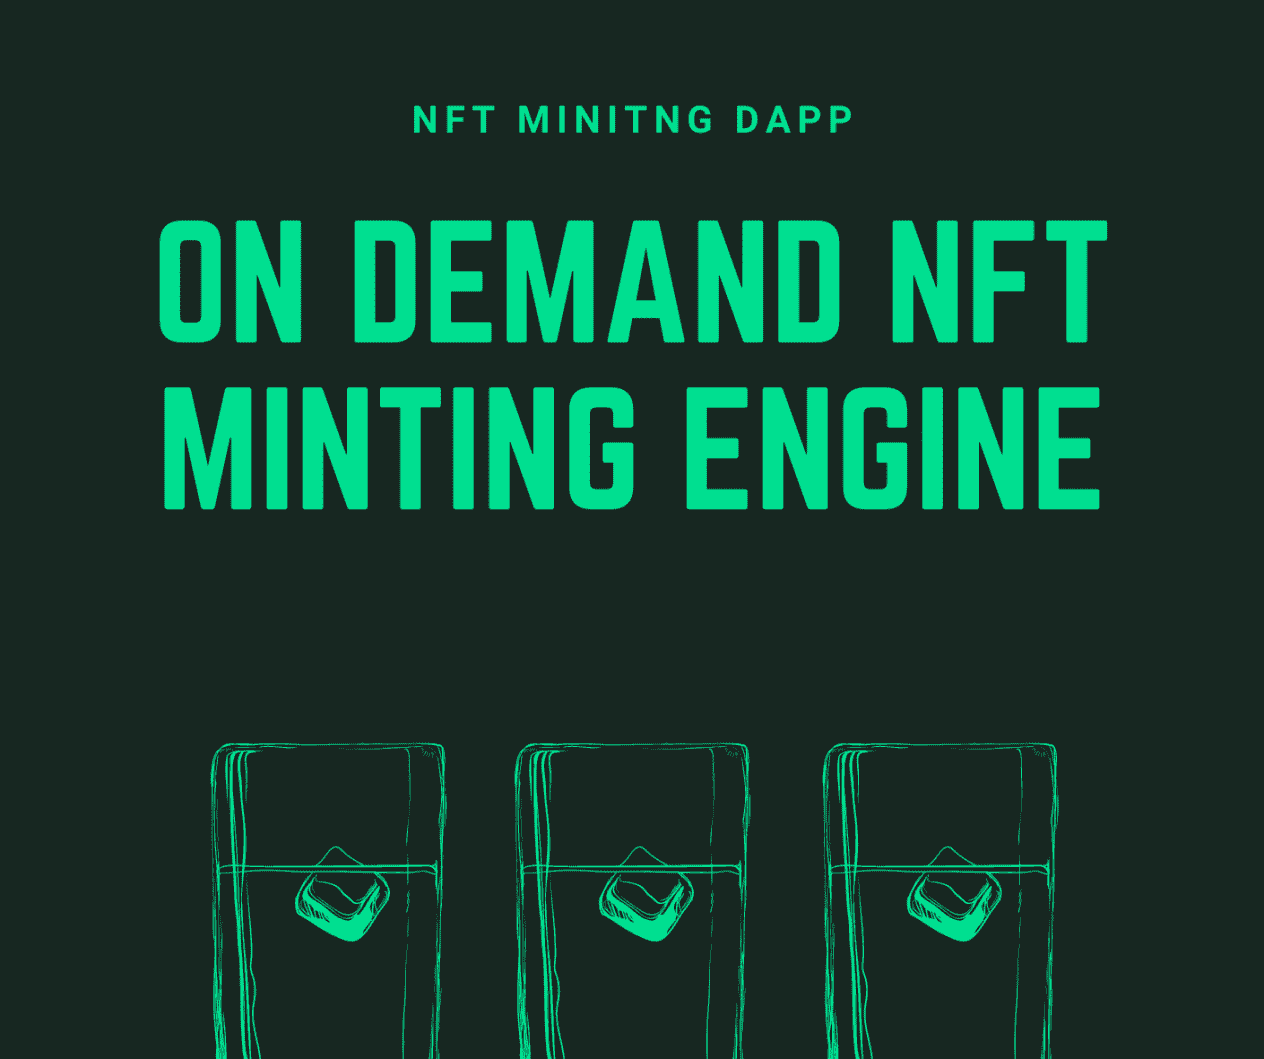 I will create on demand nft minting dapp and website